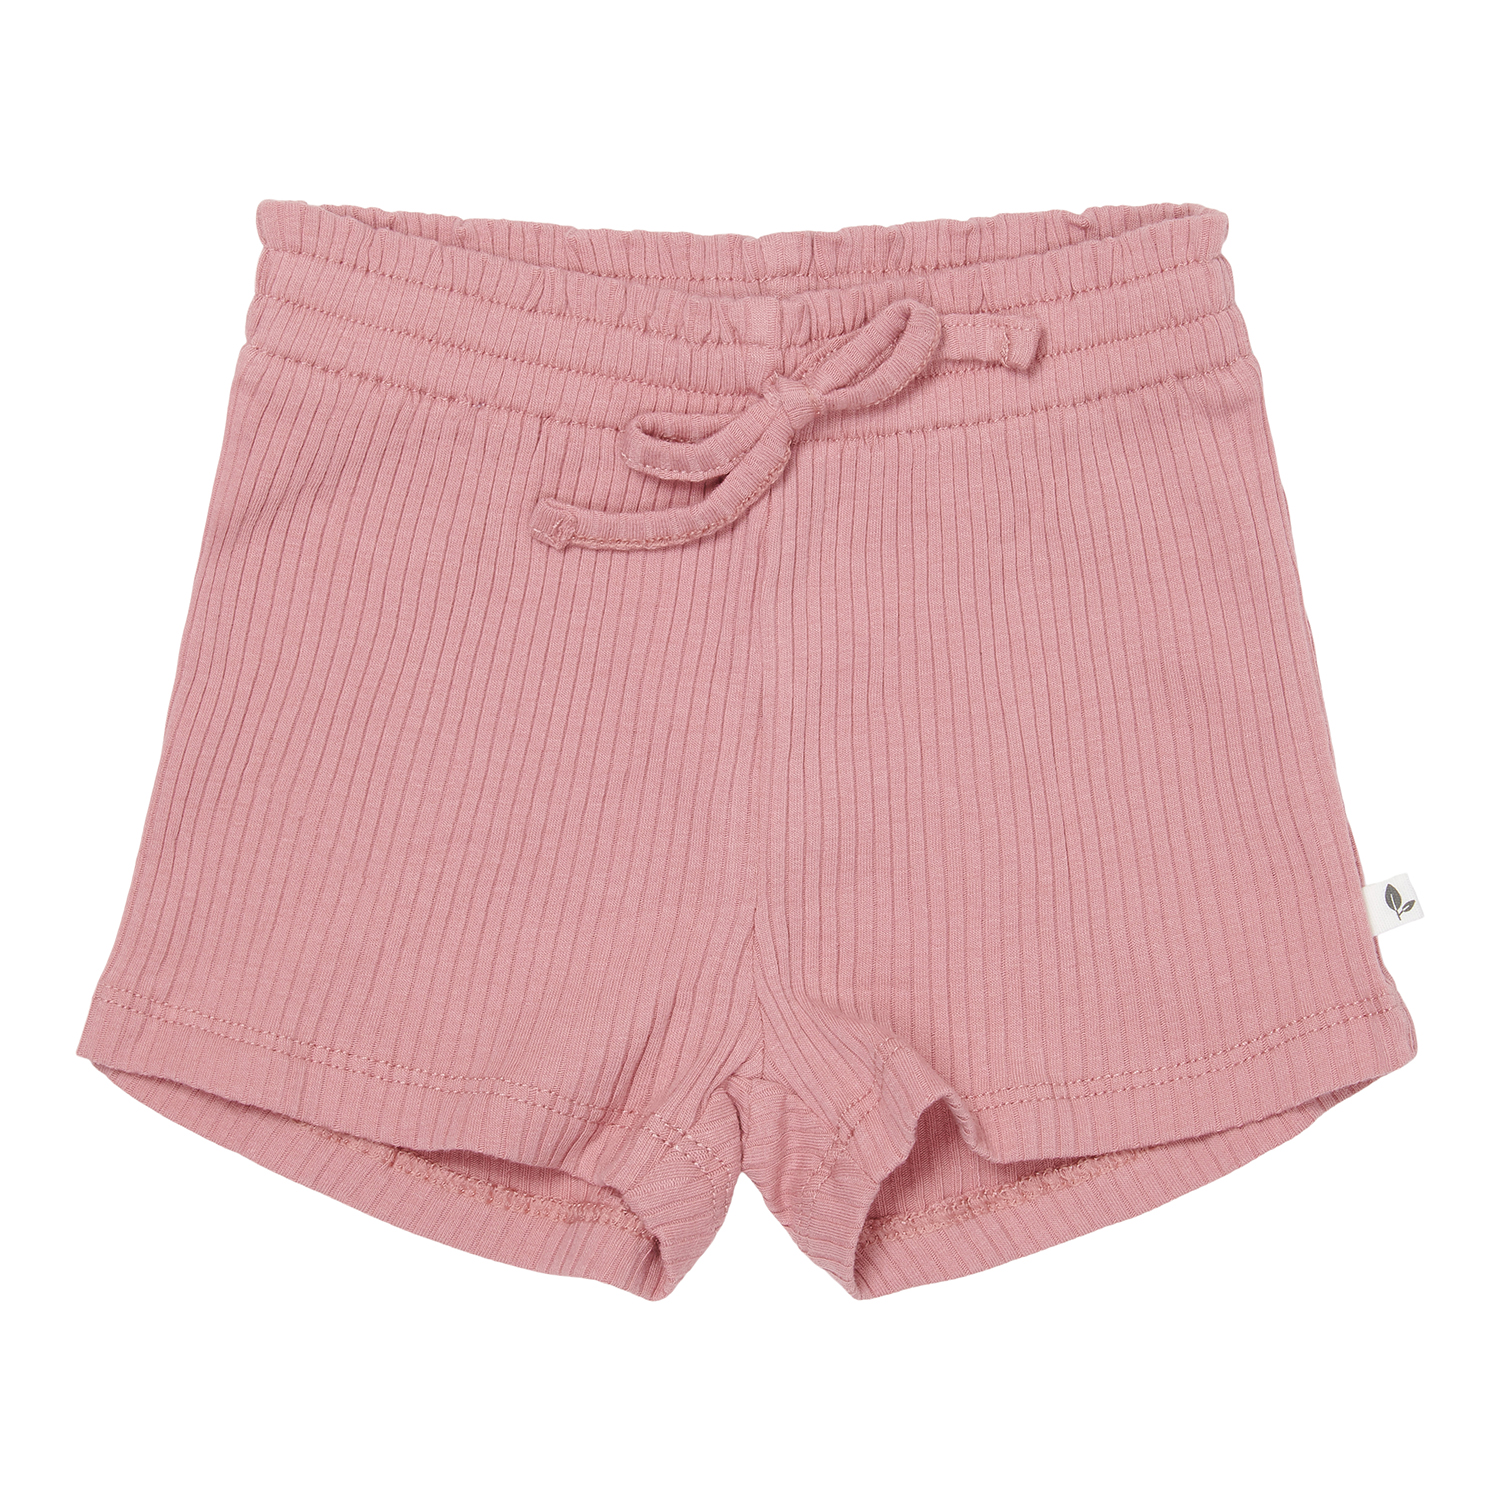 Kurze Hose / Shorts Rippe vintage pink (Gr. 62)